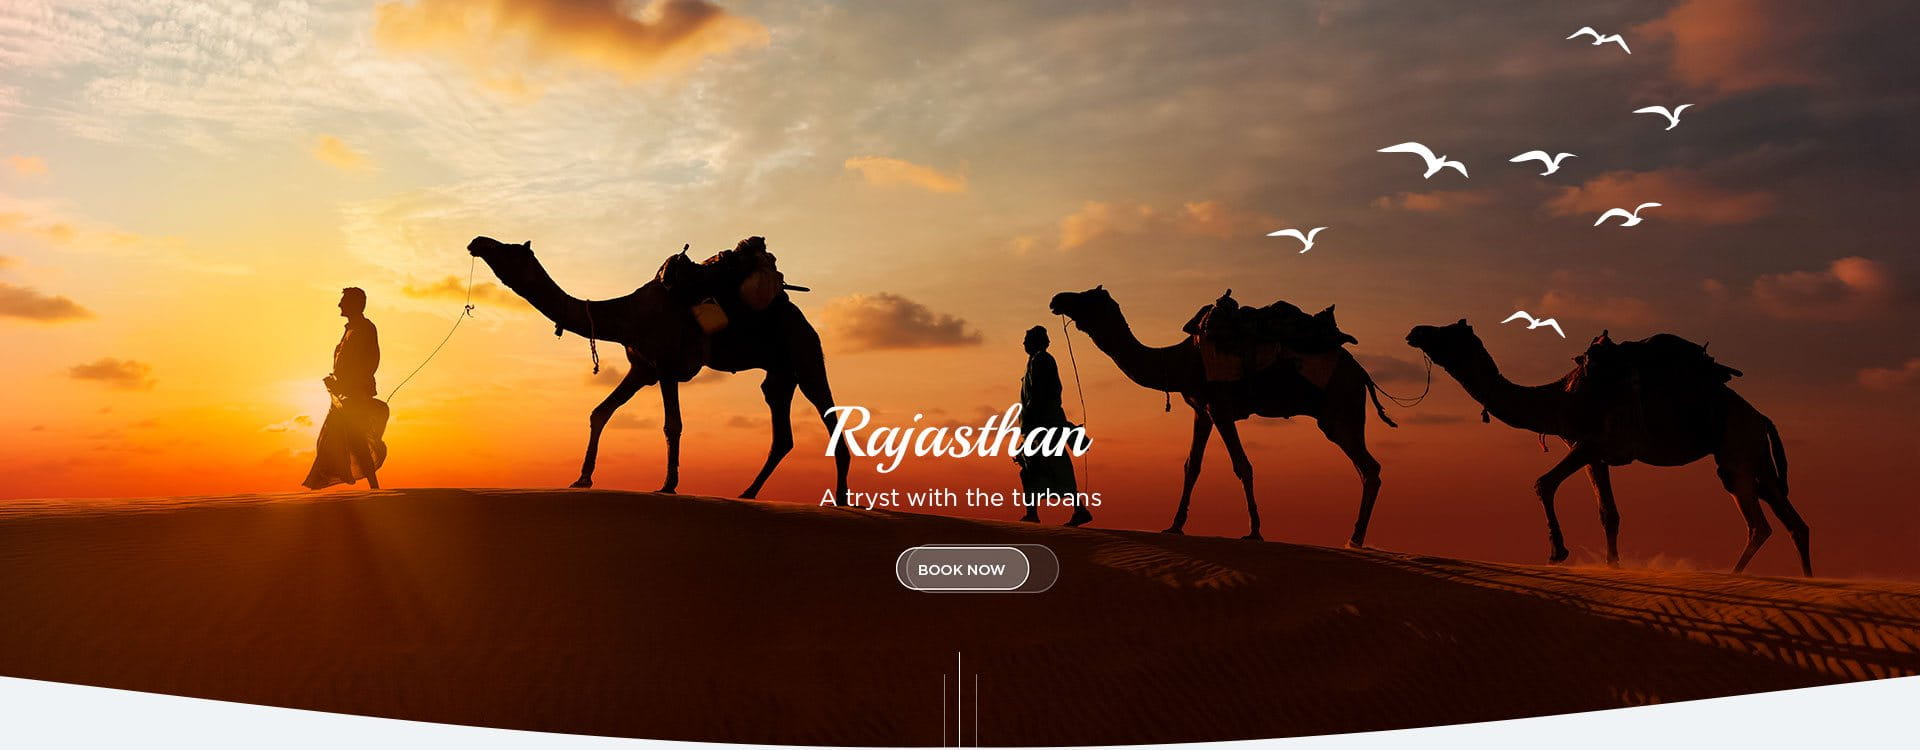 Rajasthan Tours & Travel agency - Eastern Meadows Tour